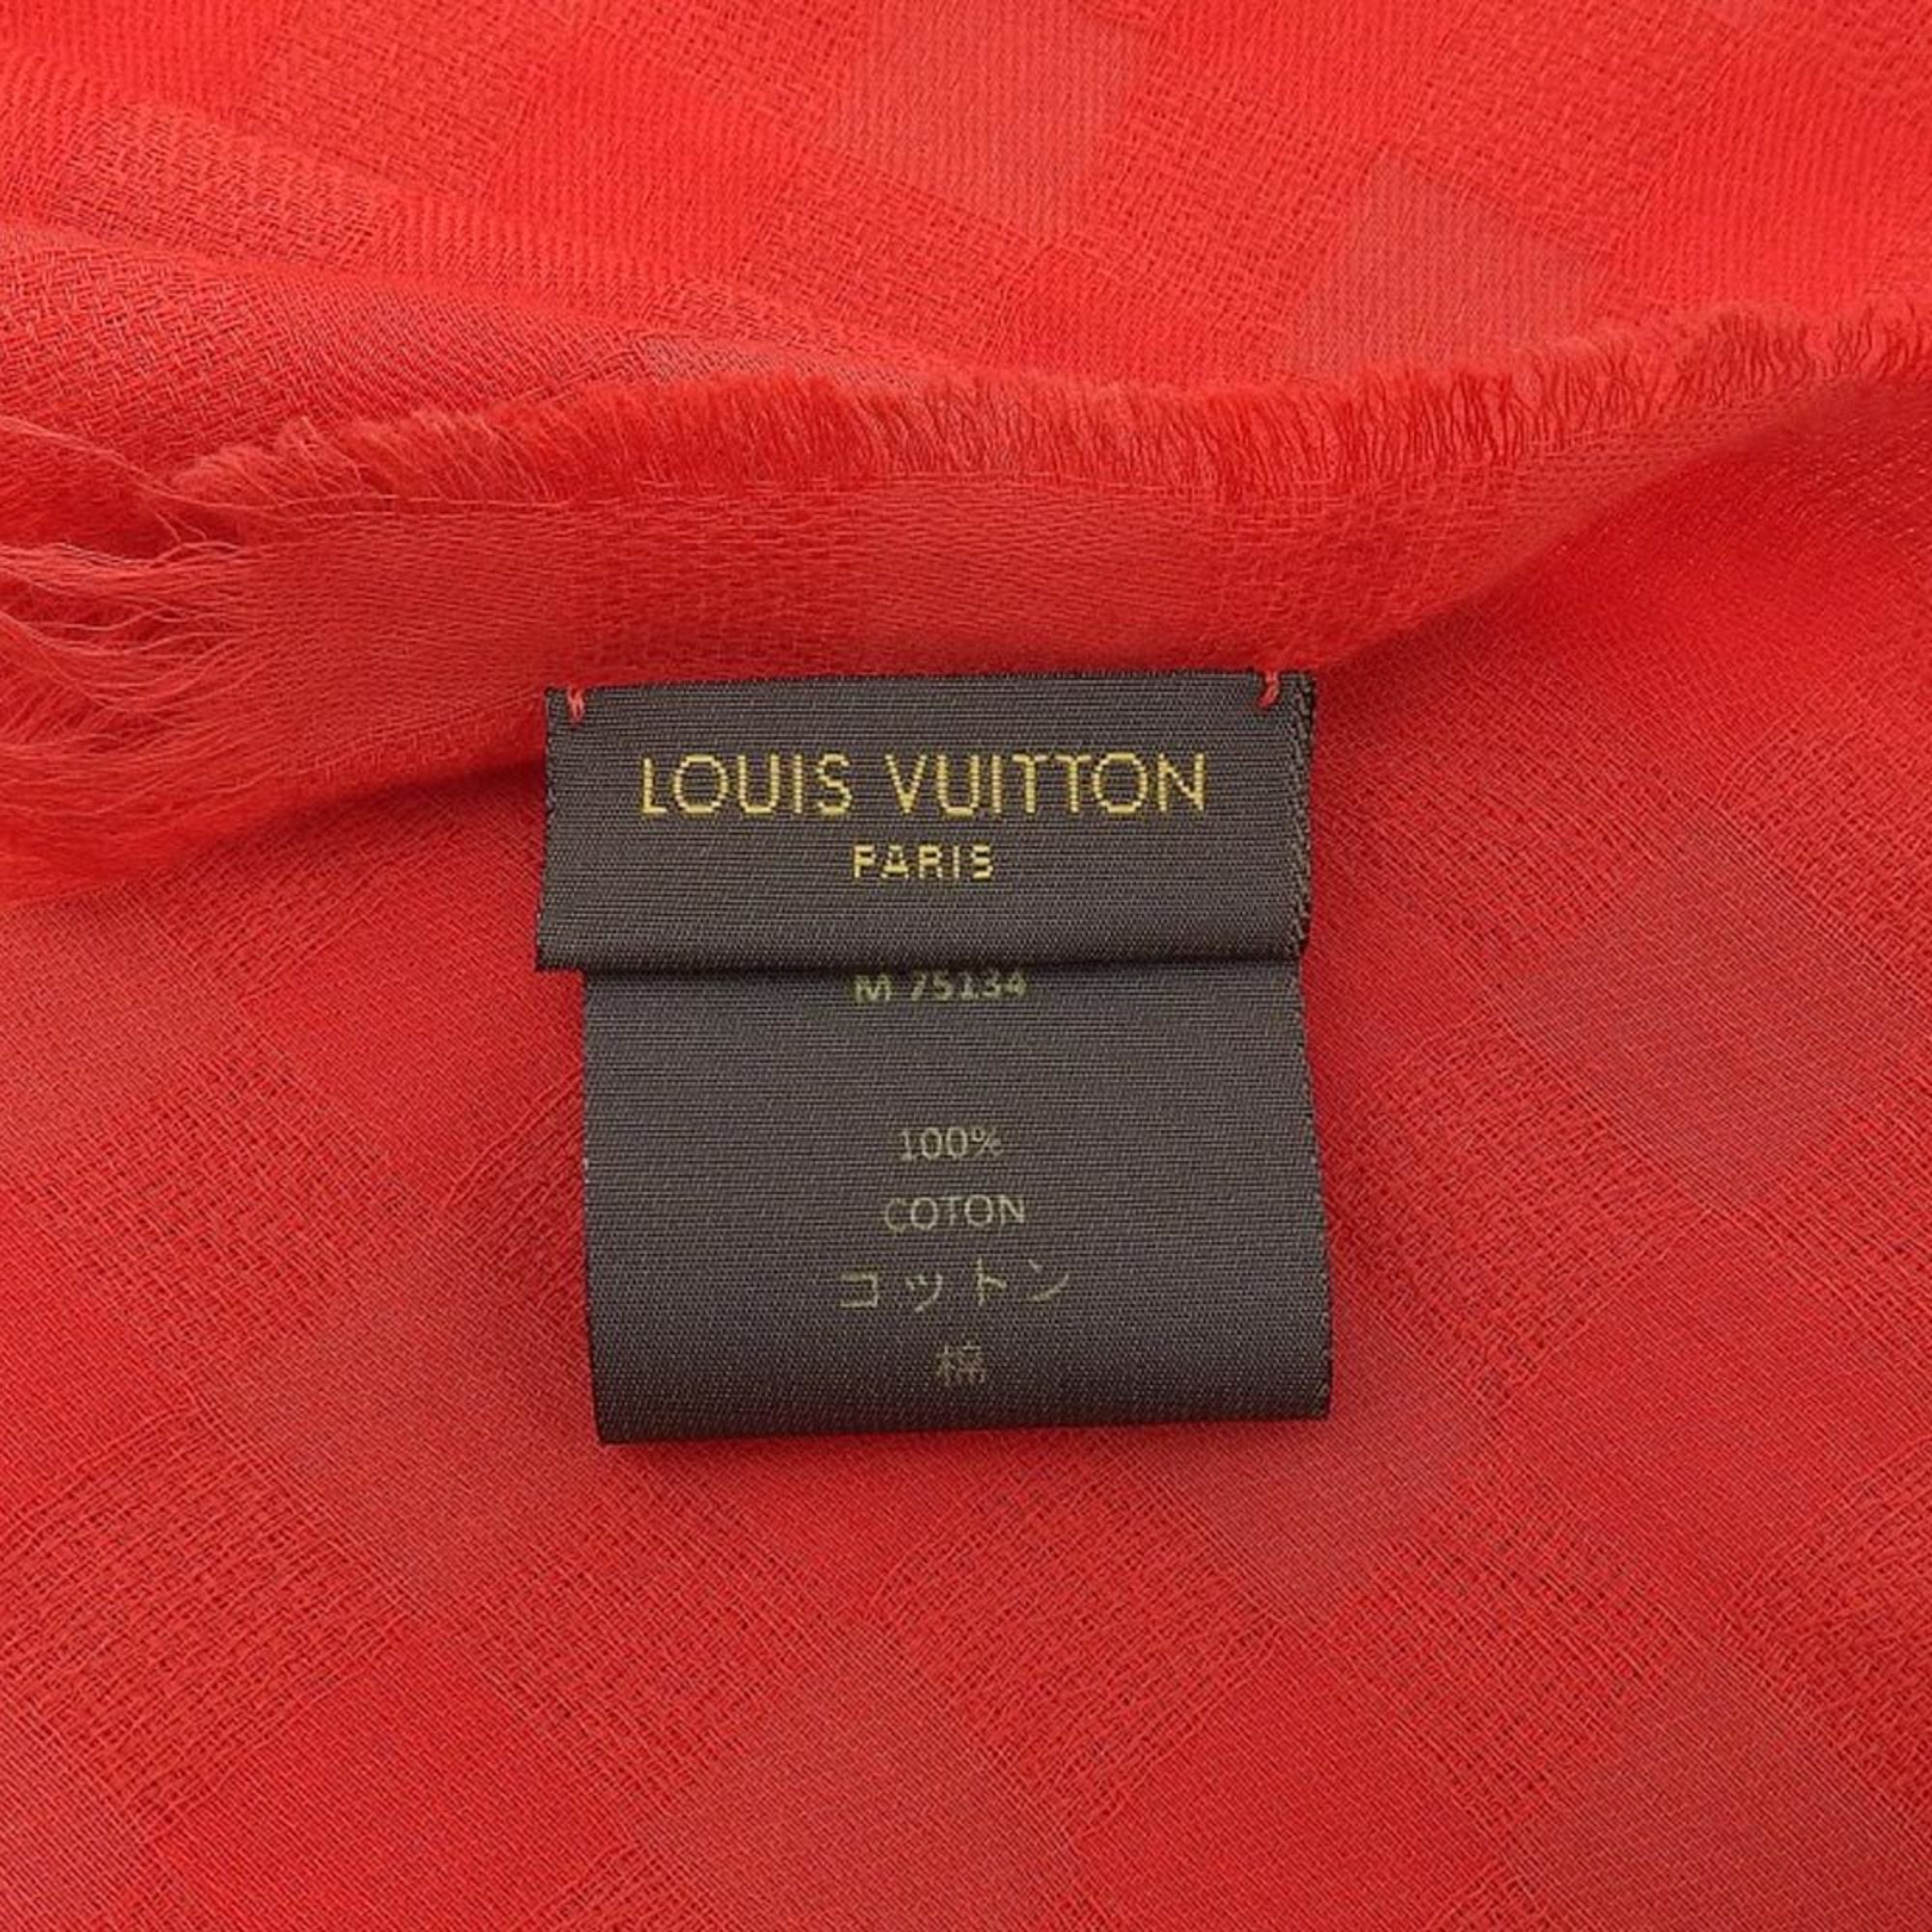 Louis Vuitton Etoile Masai Check Degradé Scarf Red M75134